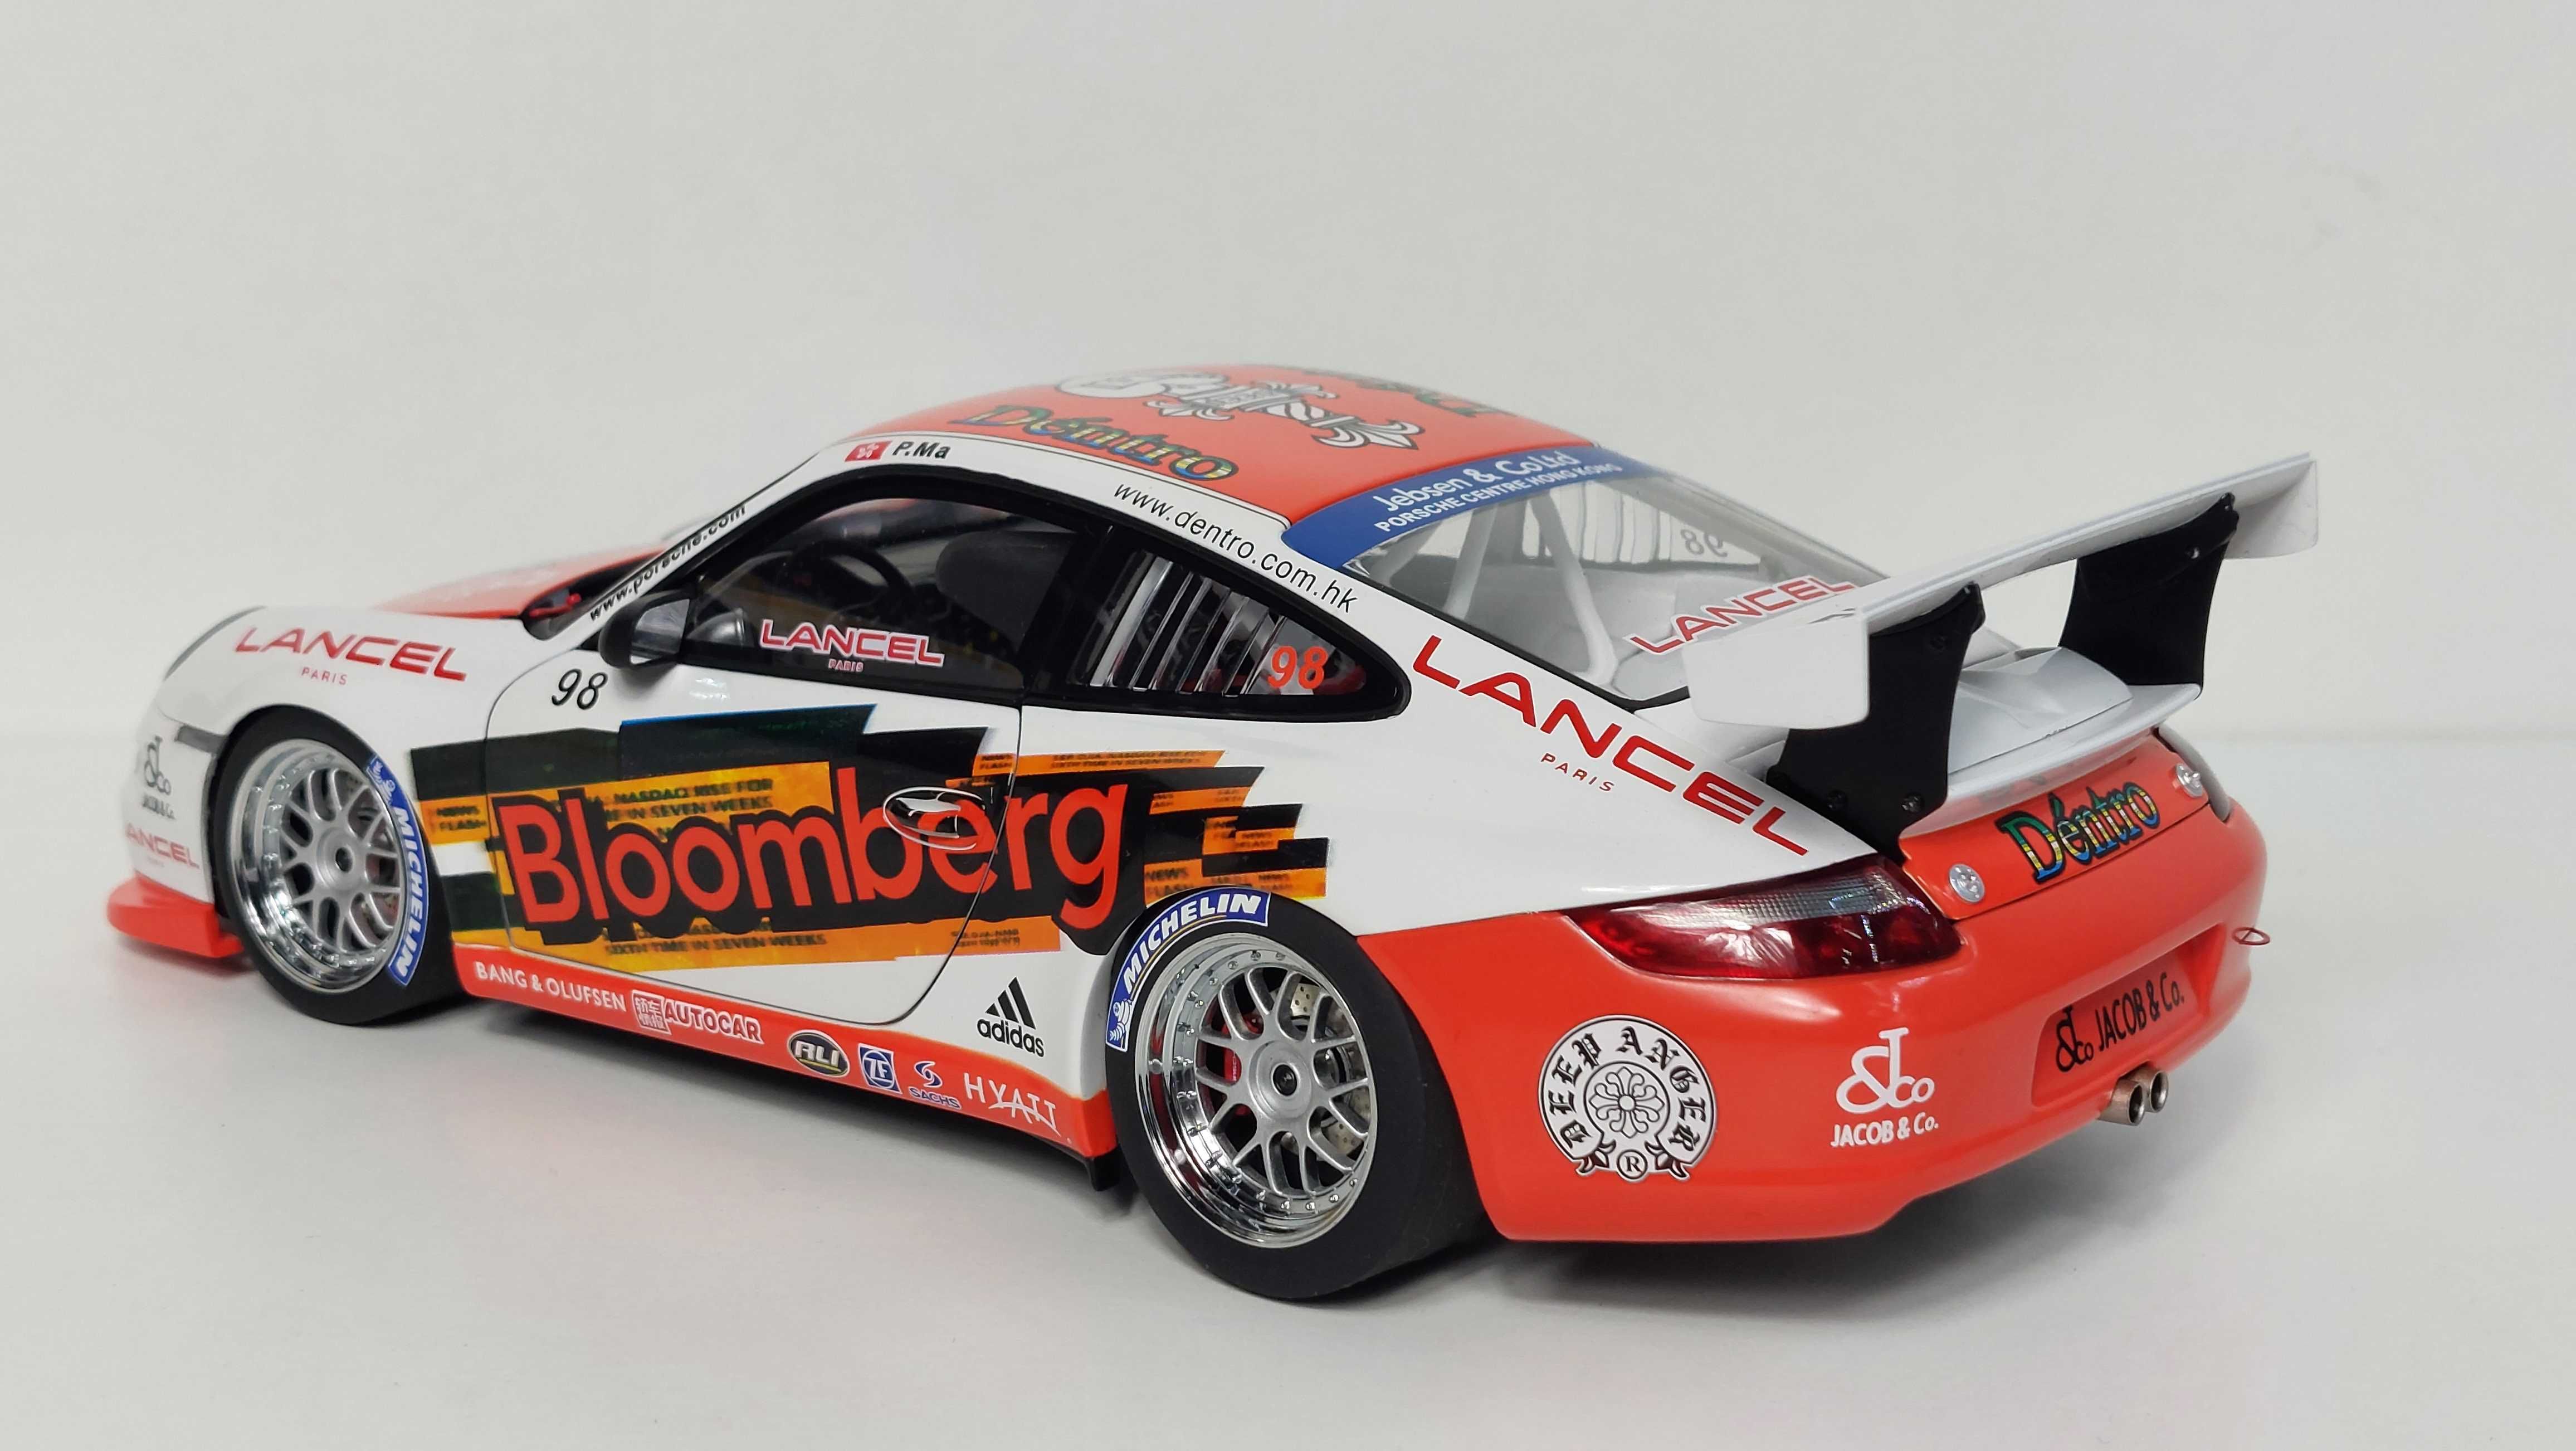 Porsche 911 (997) GT3 CUP Bloomberg Autoart 1:18